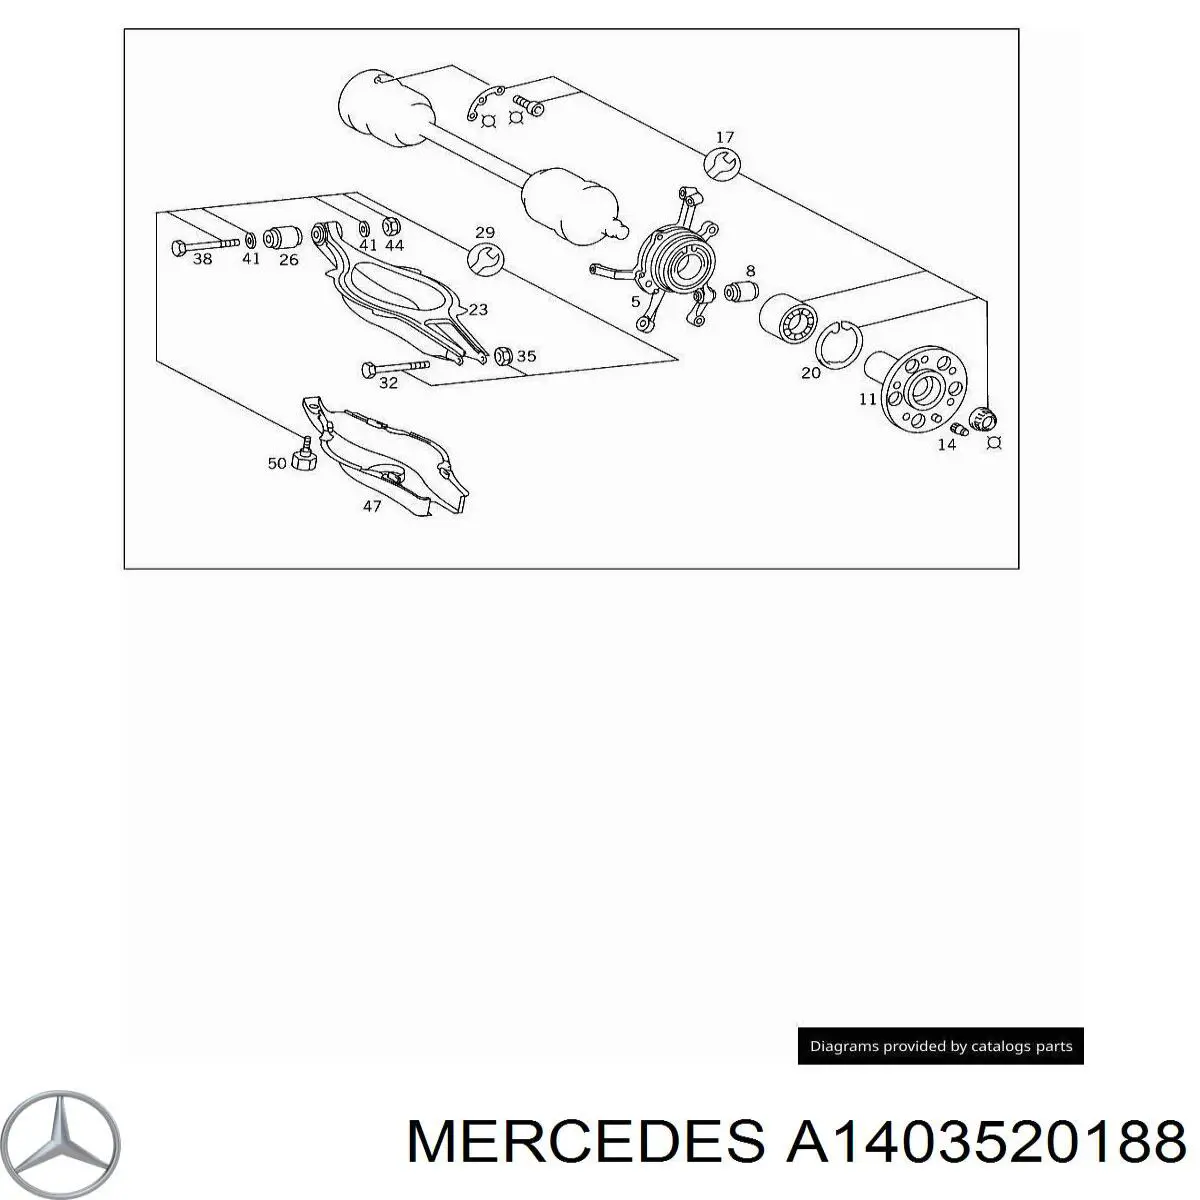 A1403520188 Mercedes